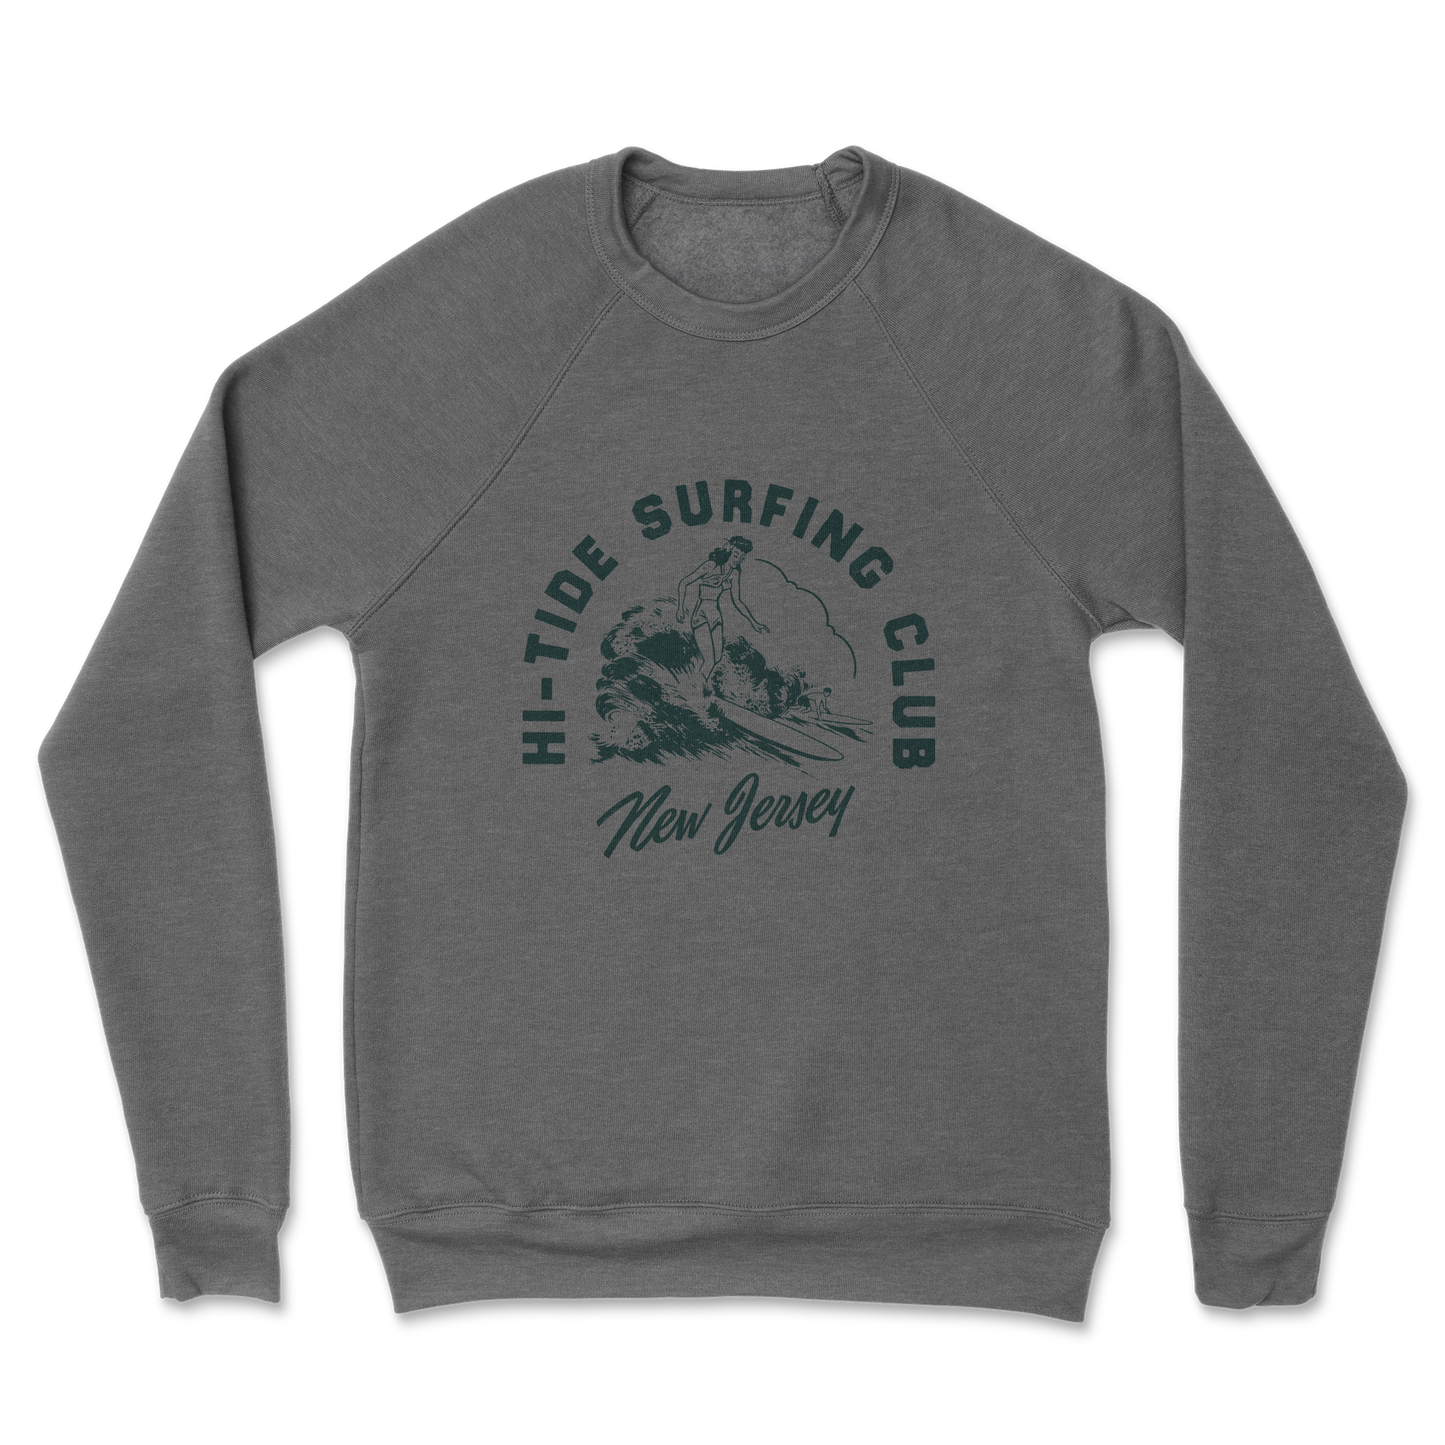 Surfing Club Crewneck Sweatshirt (Surfer Girl)